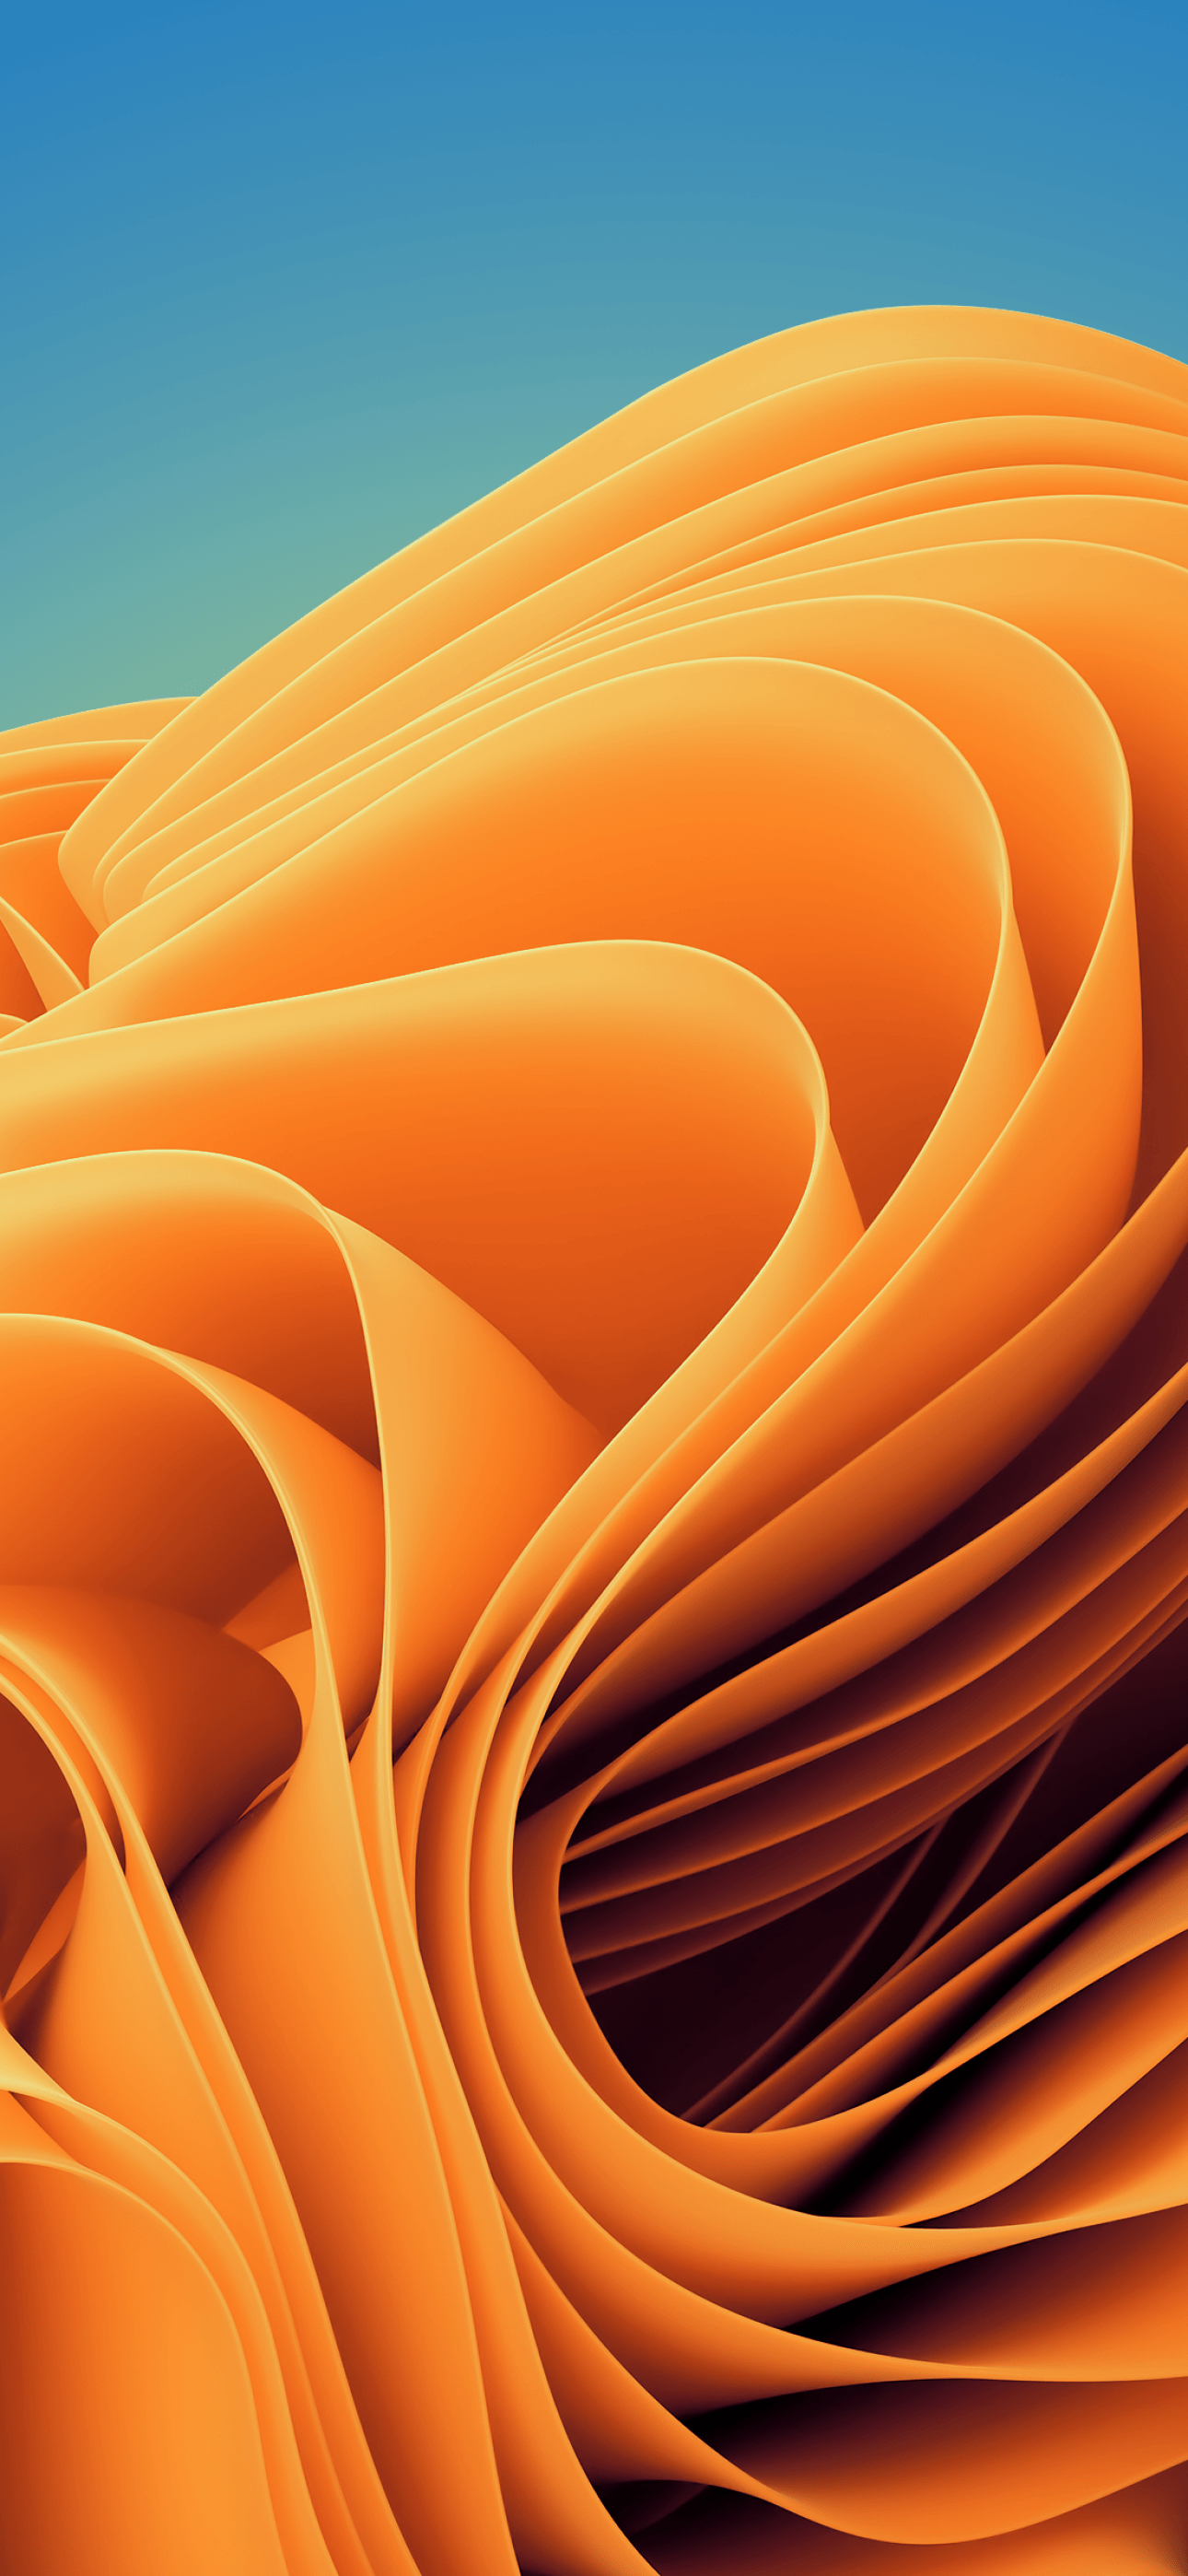 Orange abstract waves in front of a blue background - Dark orange